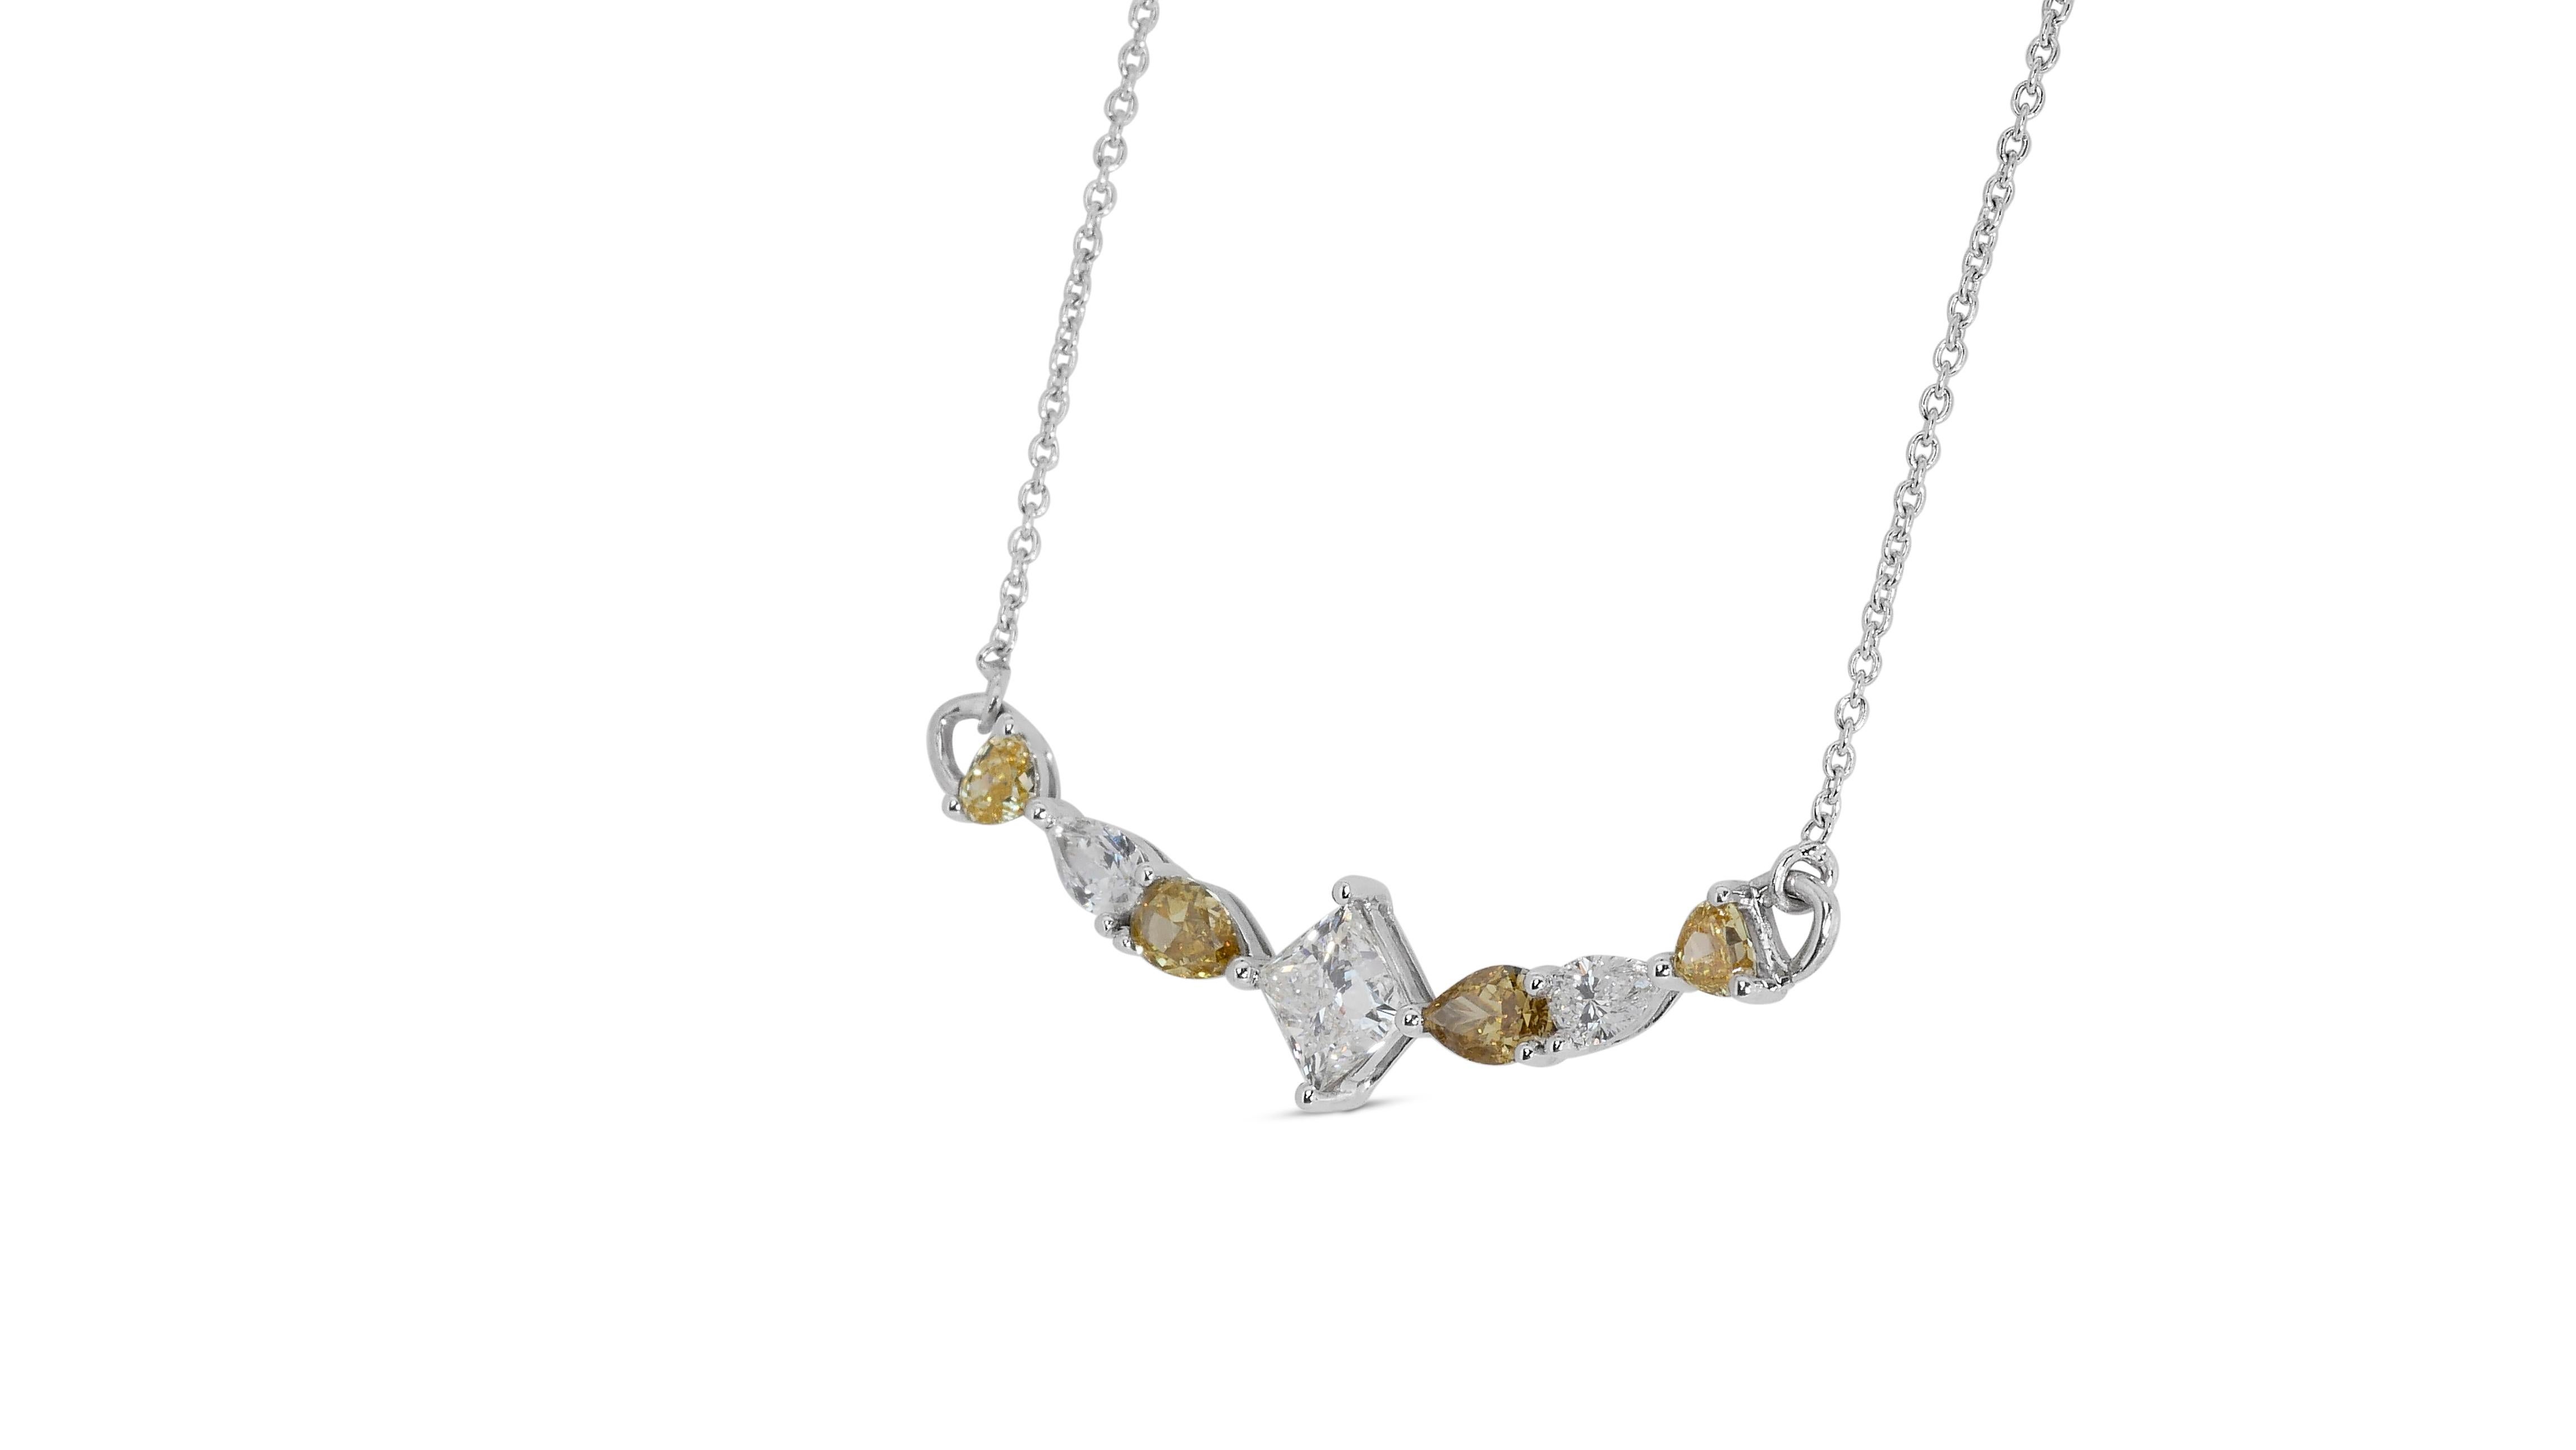 Marvelous 18k White Gold Necklace w/ 1.9 Carat Natural Diamonds IGI Certificate For Sale 1